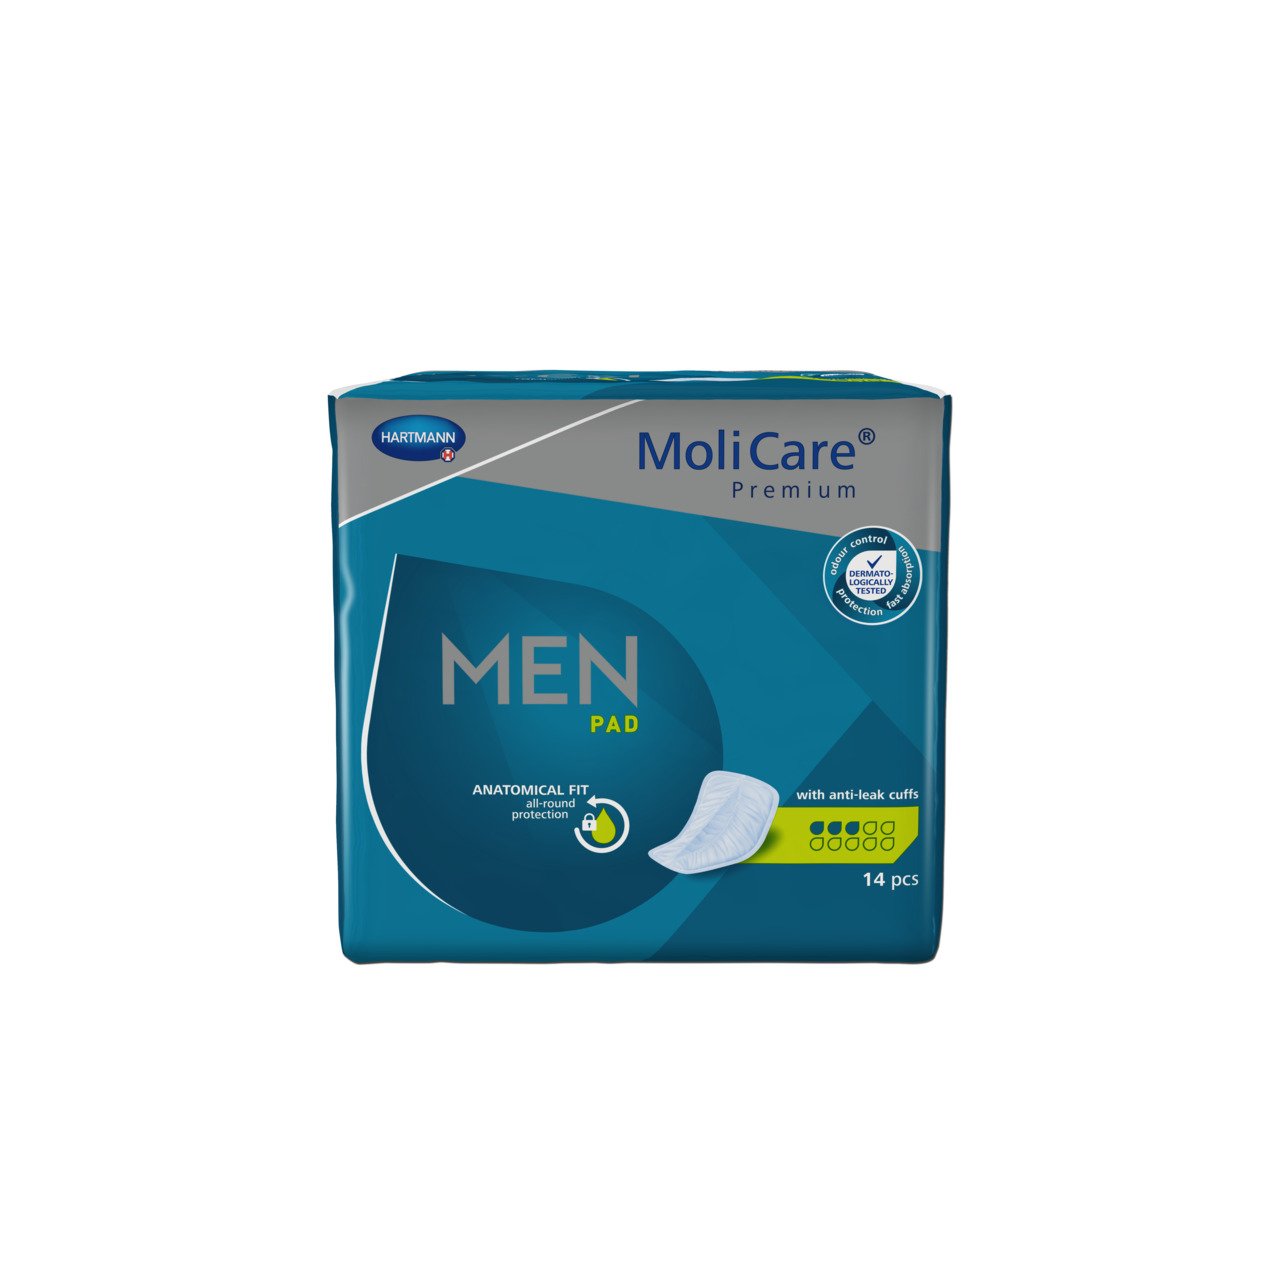 MoliCare Premium Men Pad 3 drops 112